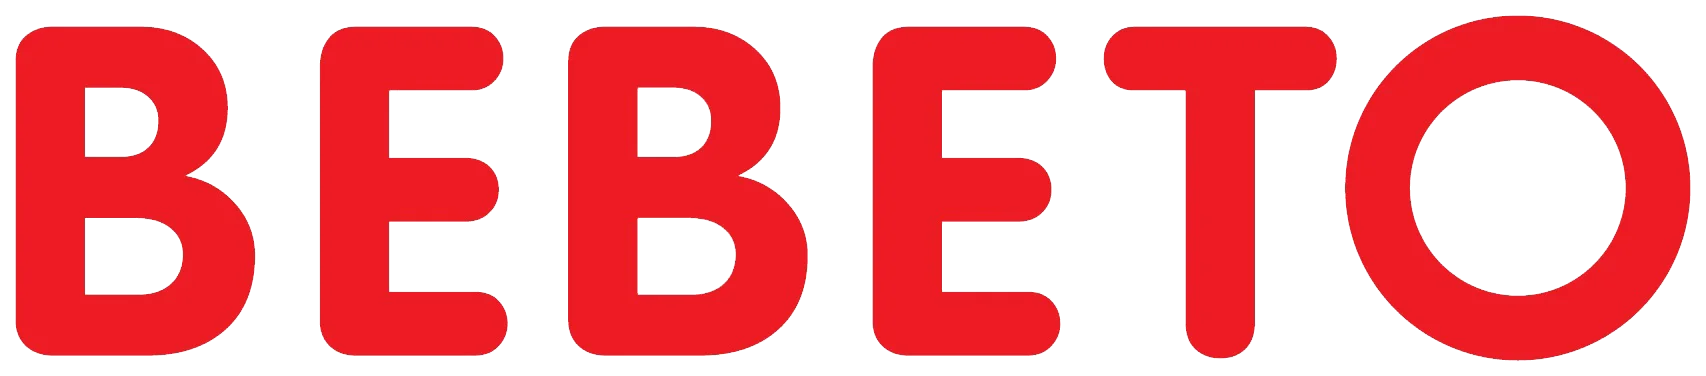 BEBETO logo